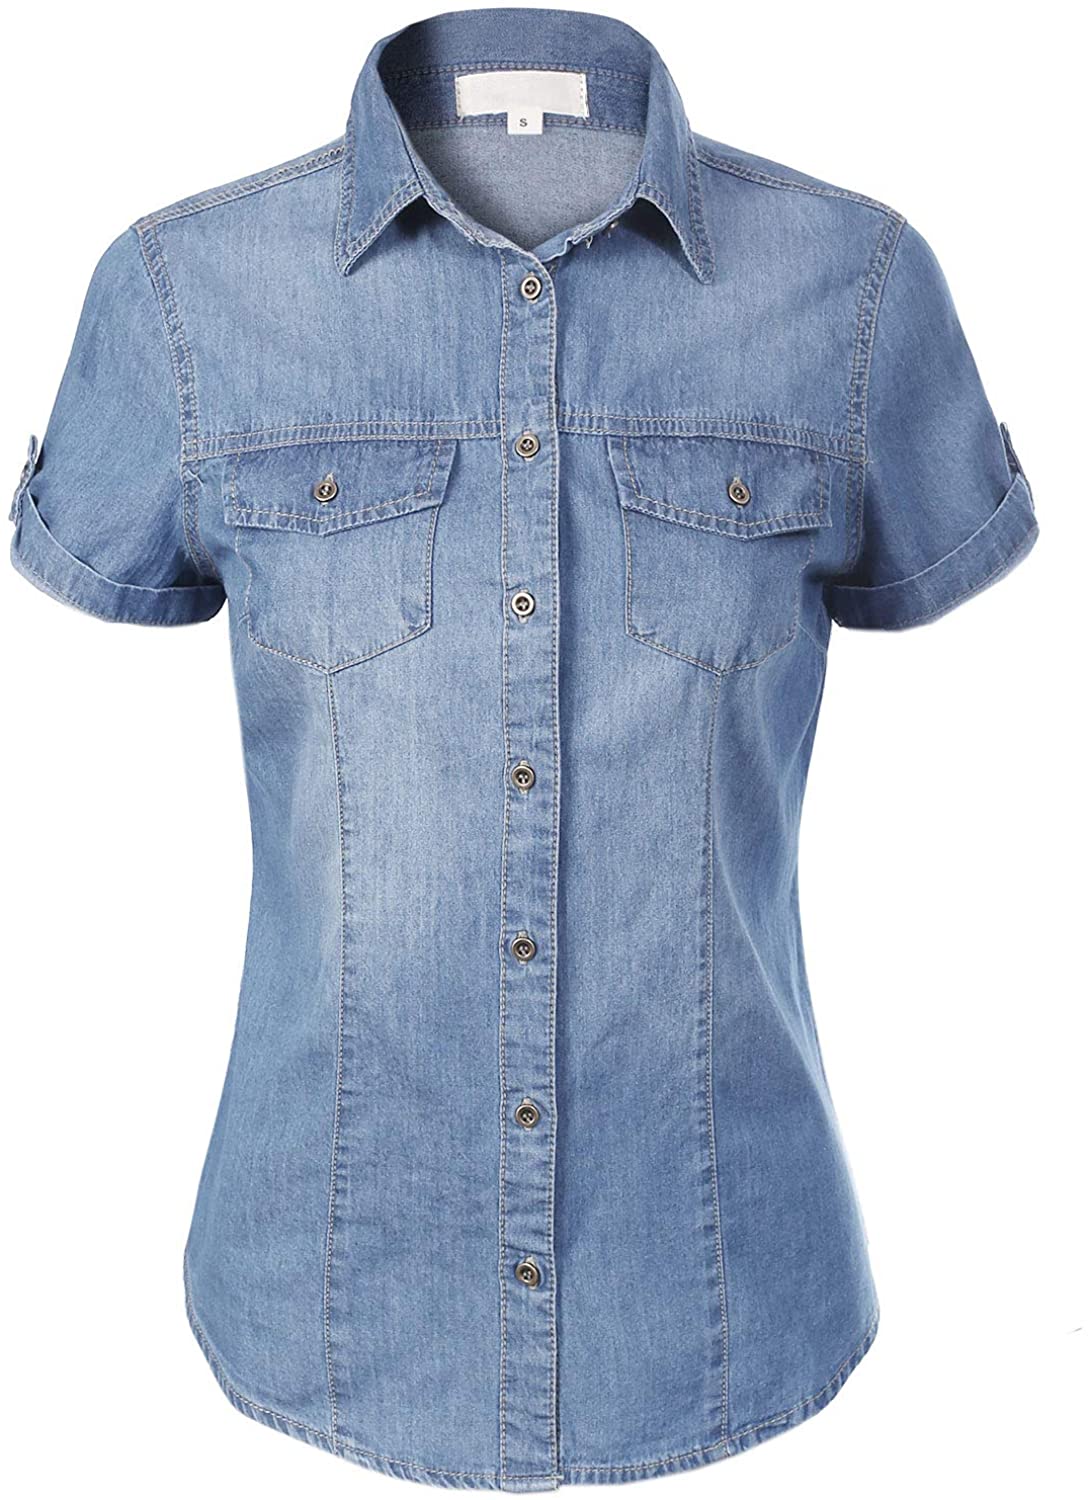 Design by Olivia Women's Cap Sleeve Button Down Denim Chambray Shirt